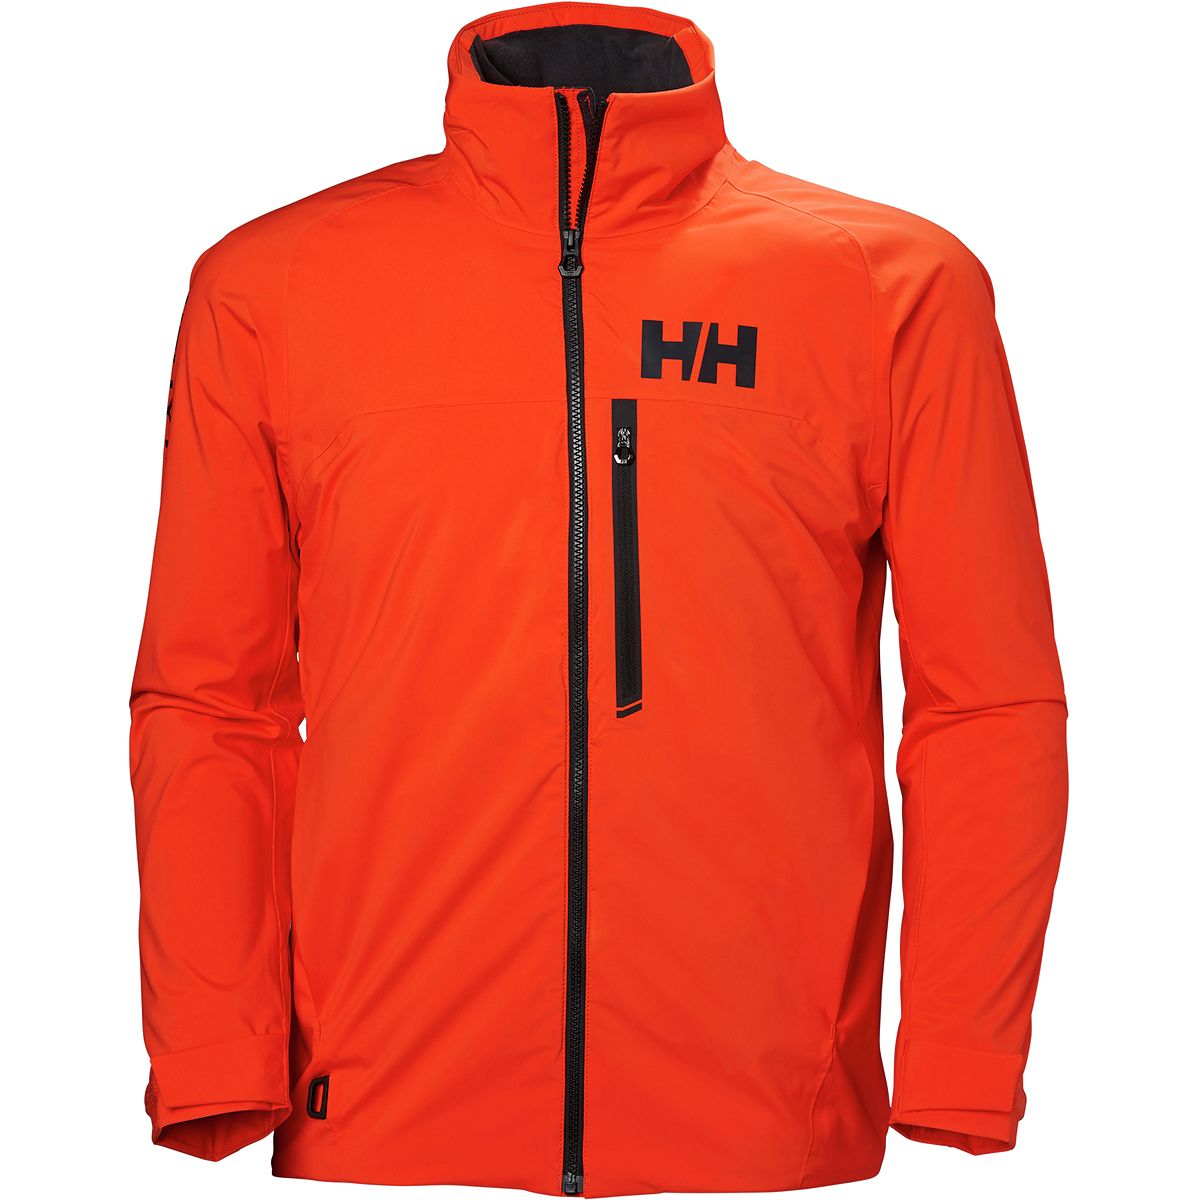 Helly Hansen HP Racing Midlayer Insulated Jacket - Men's | eBay